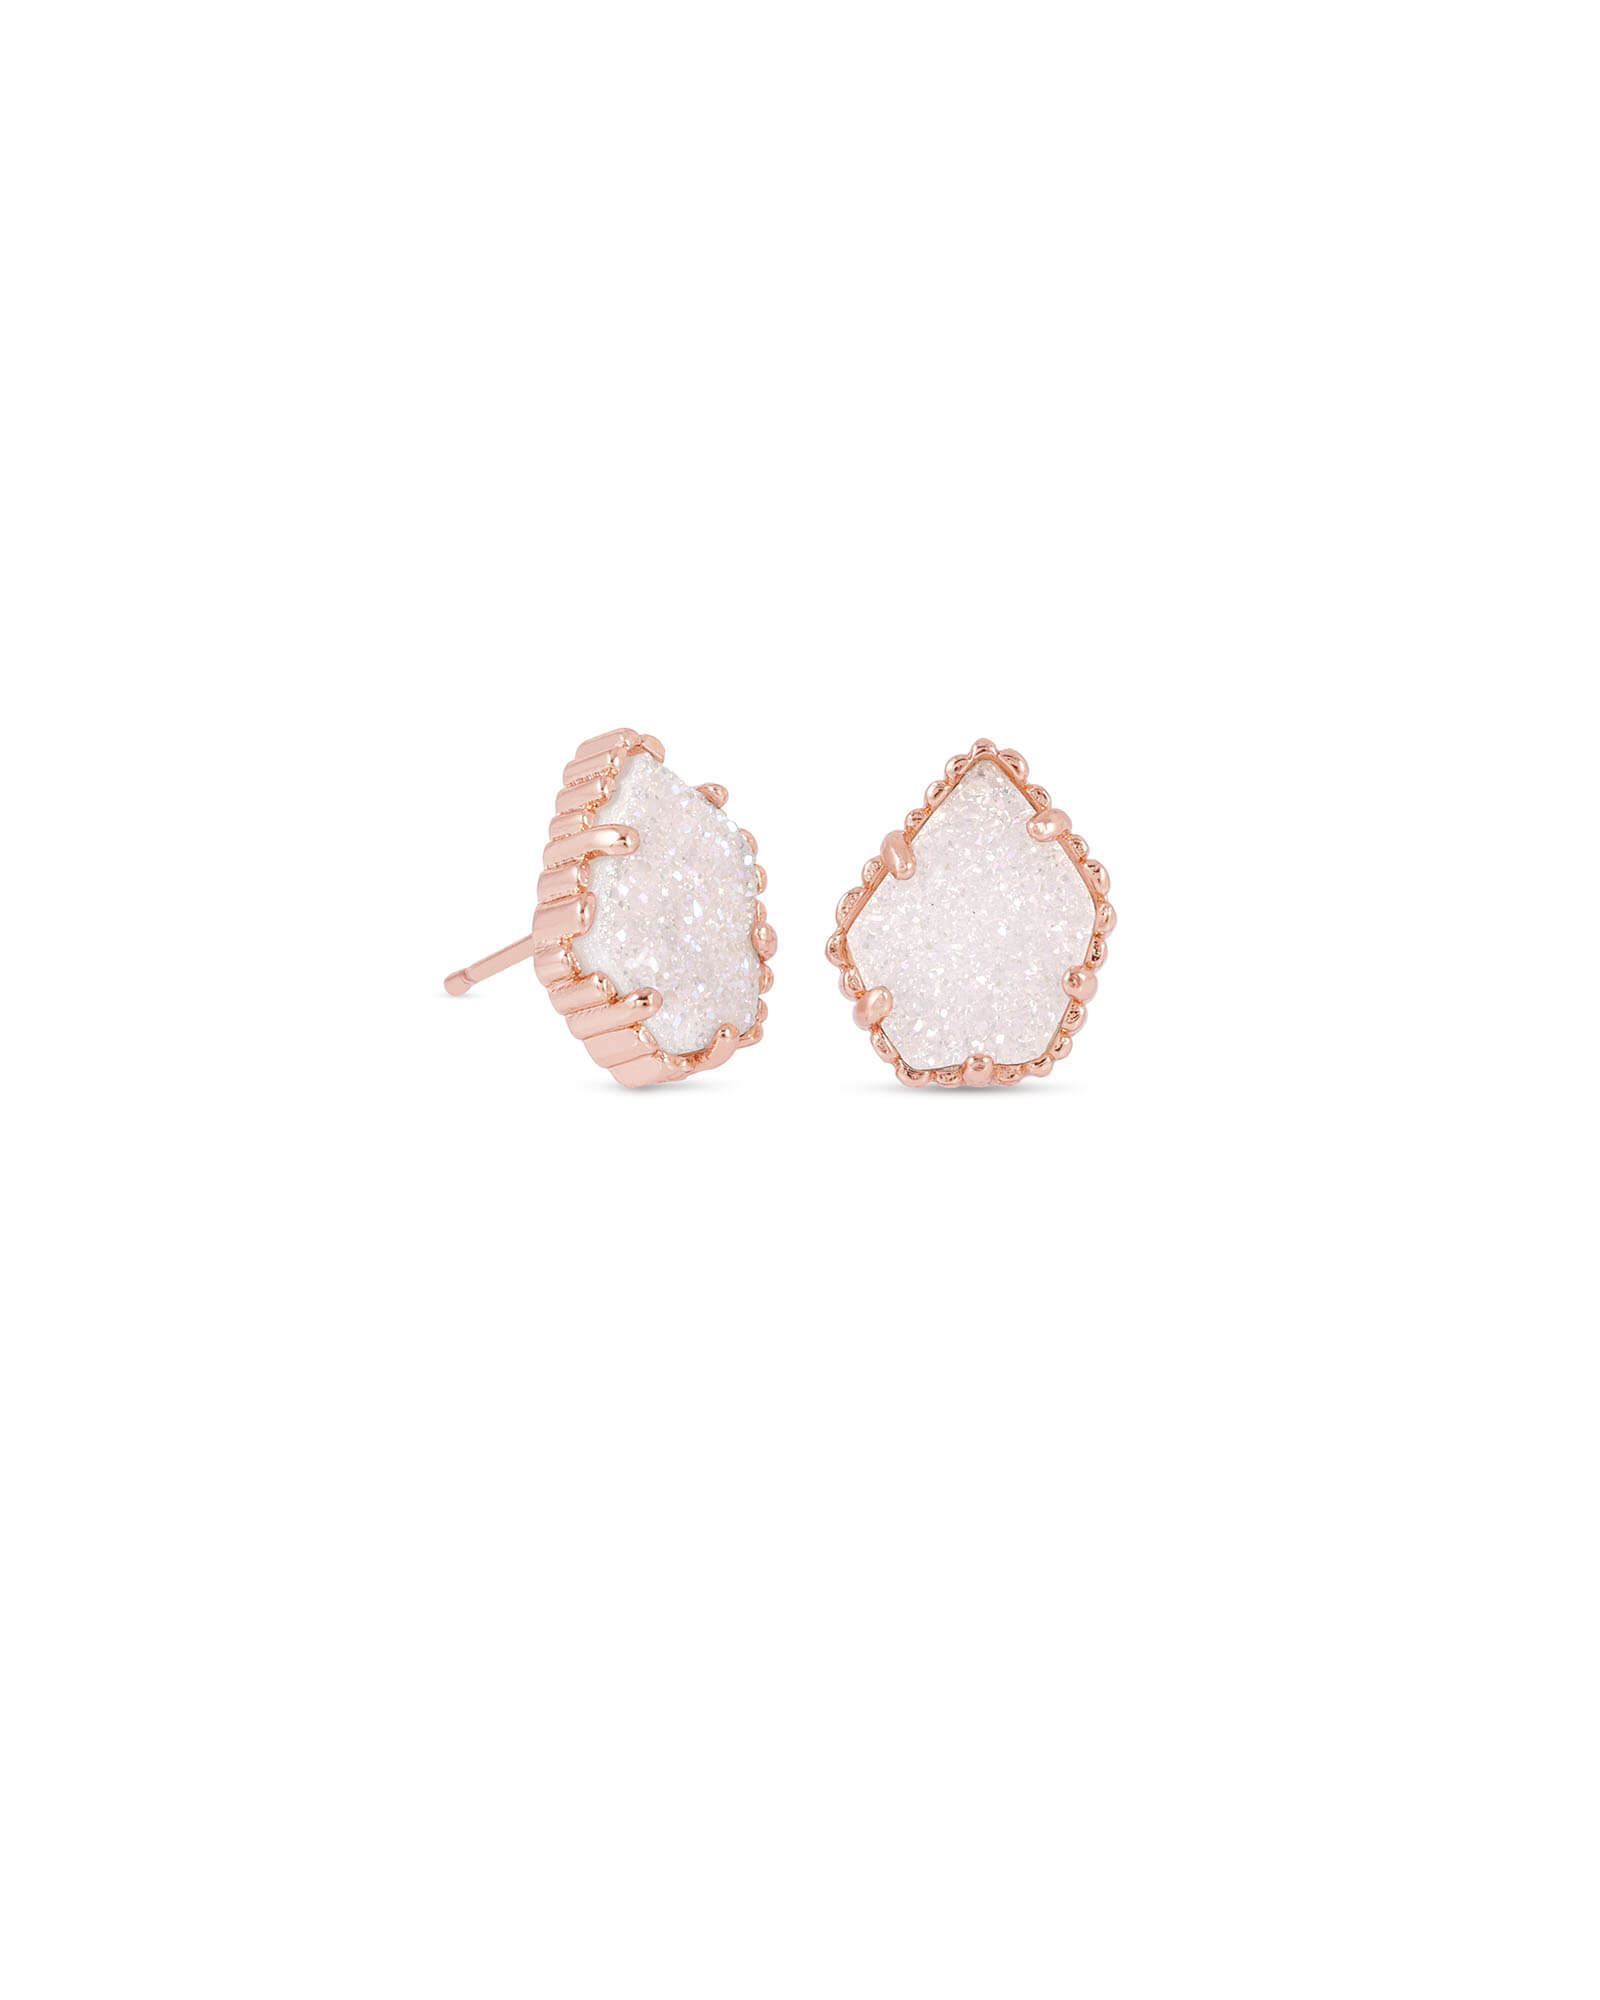 Tessa Rose Gold Stud Earrings in Iridescent Drusy | Kendra Scott